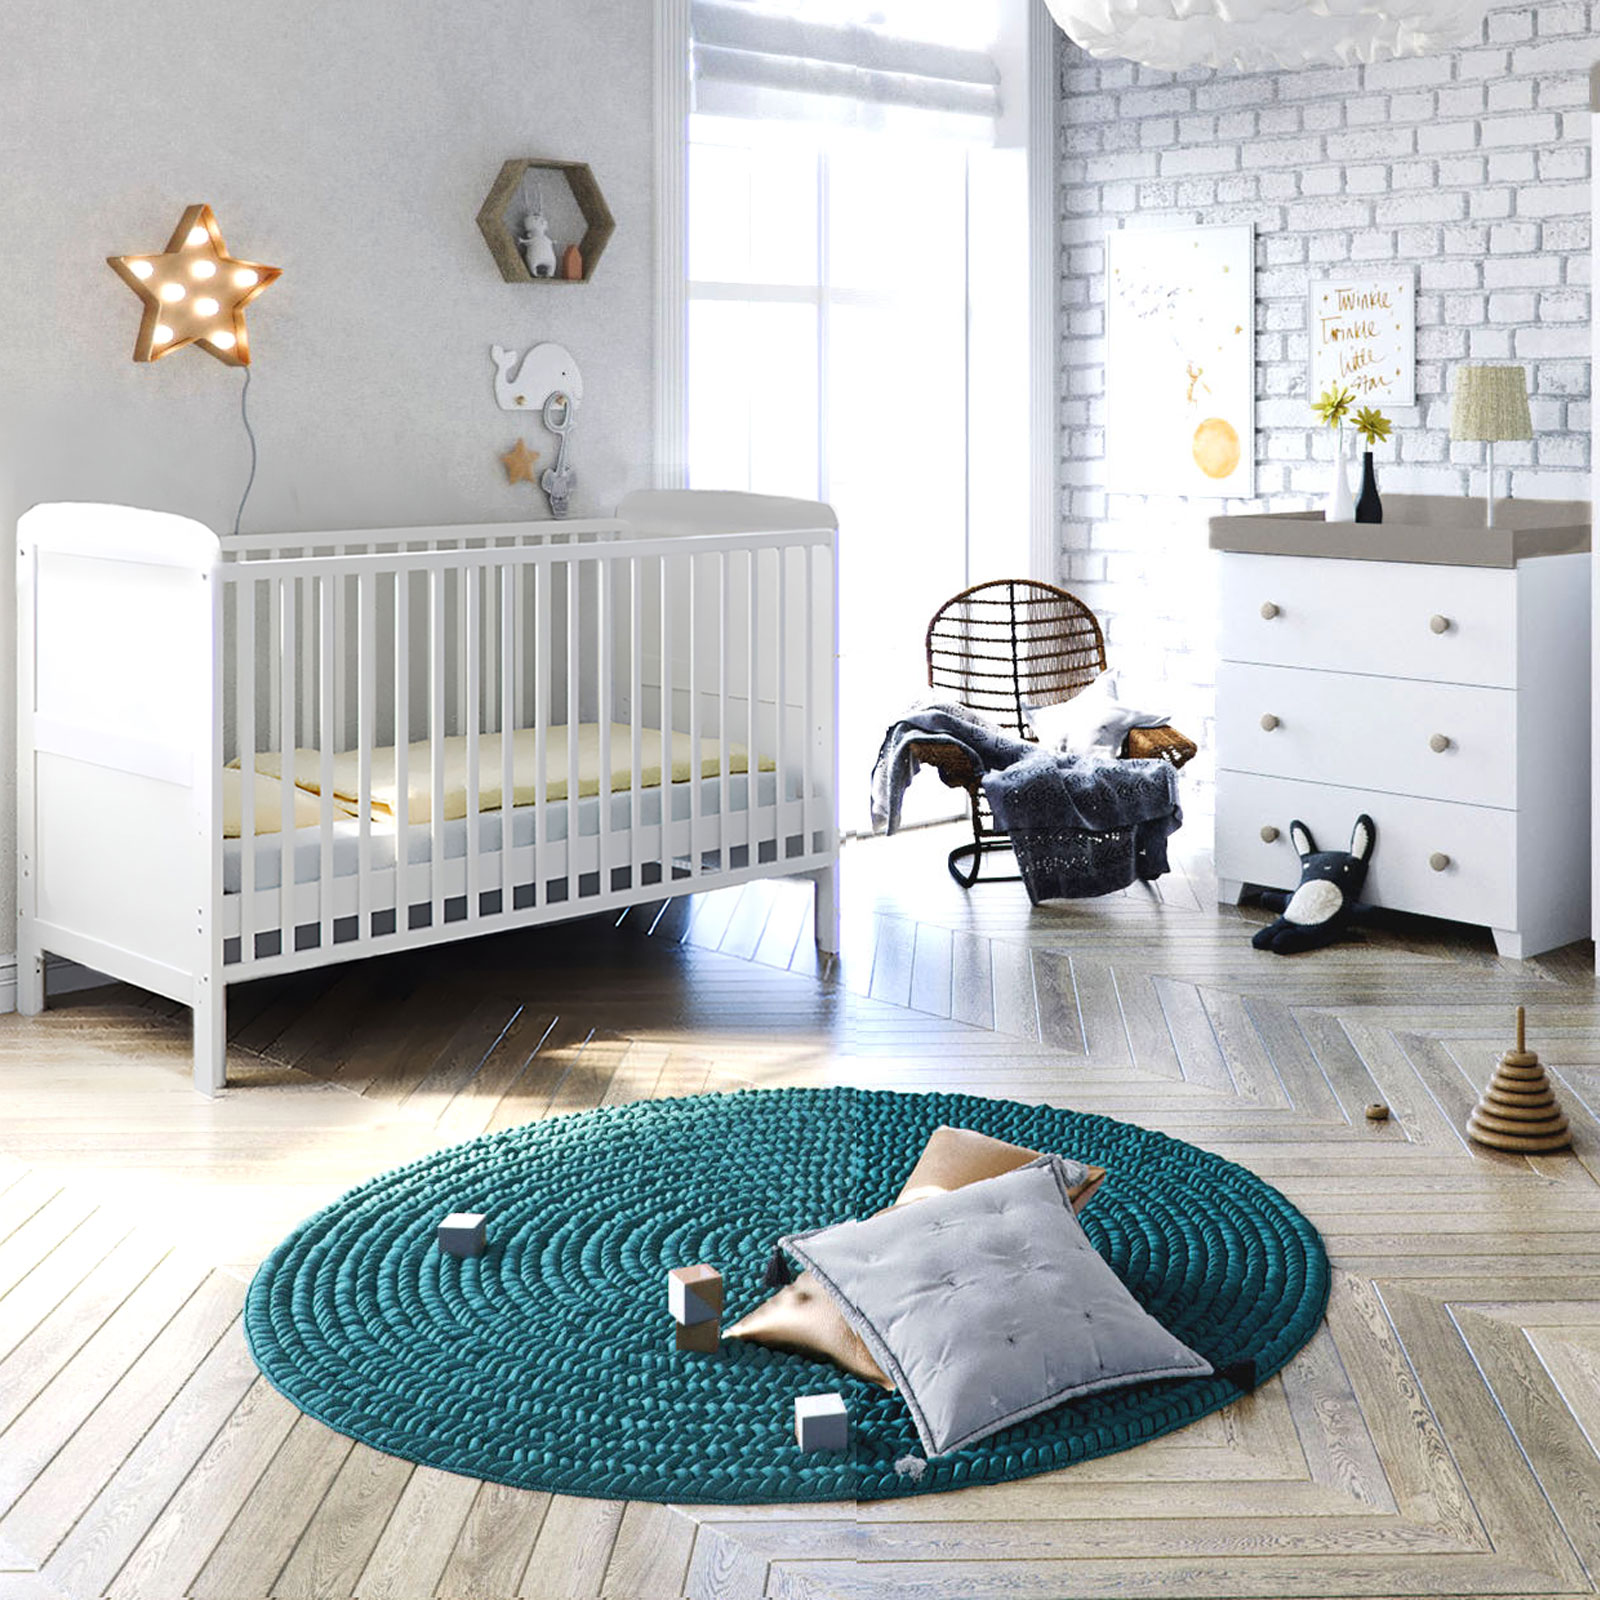 Puggle Henbury Cot Bed 4 Piece Nursery Furniture Set With Eco Fibre Mattress - White & Grey